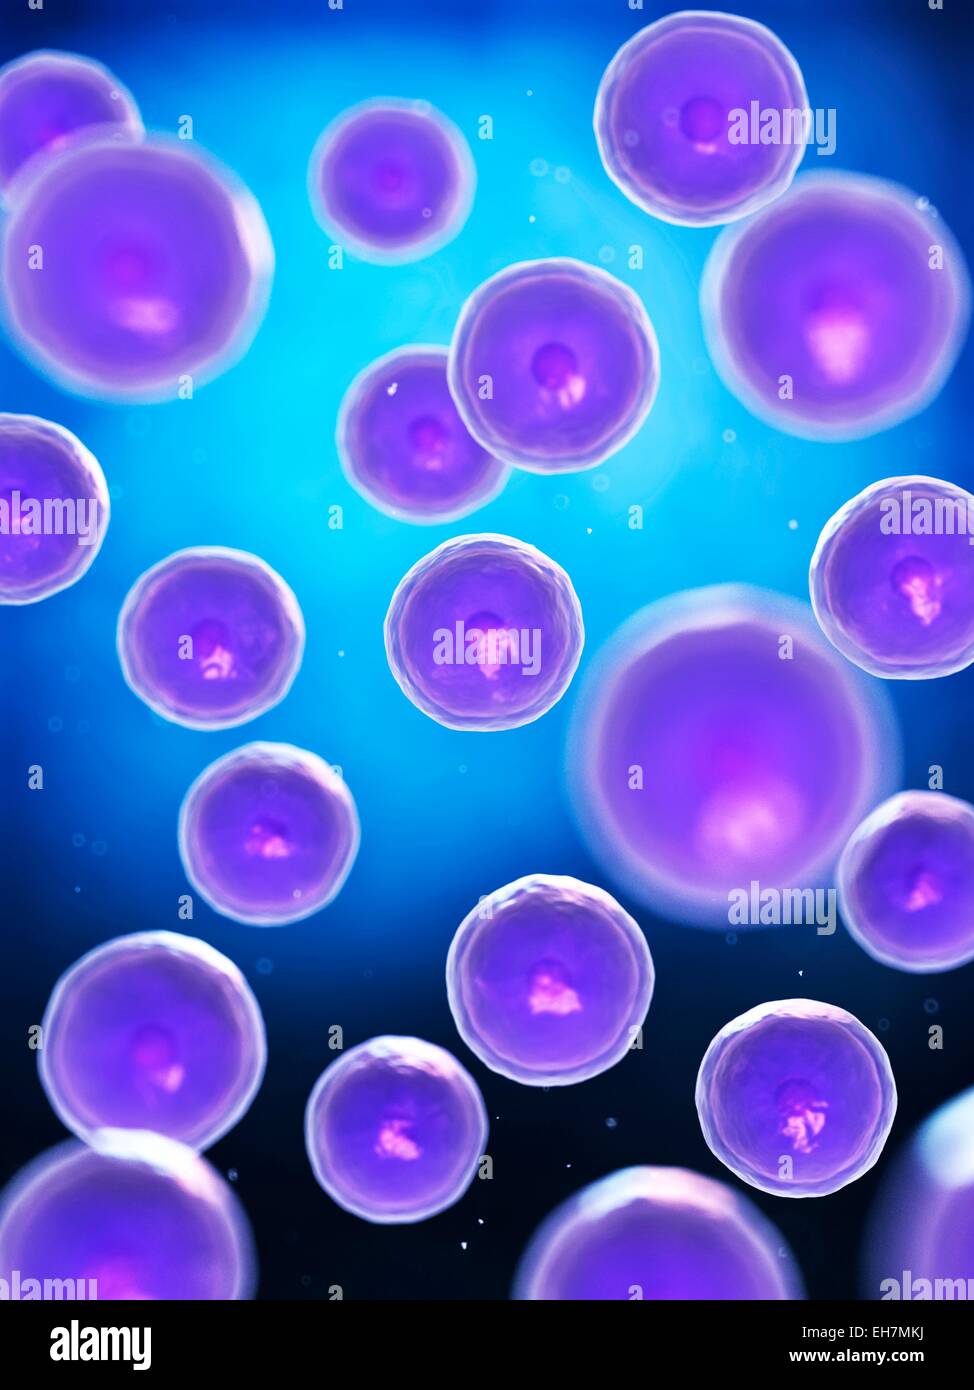 Cells, illustration Stock Photo